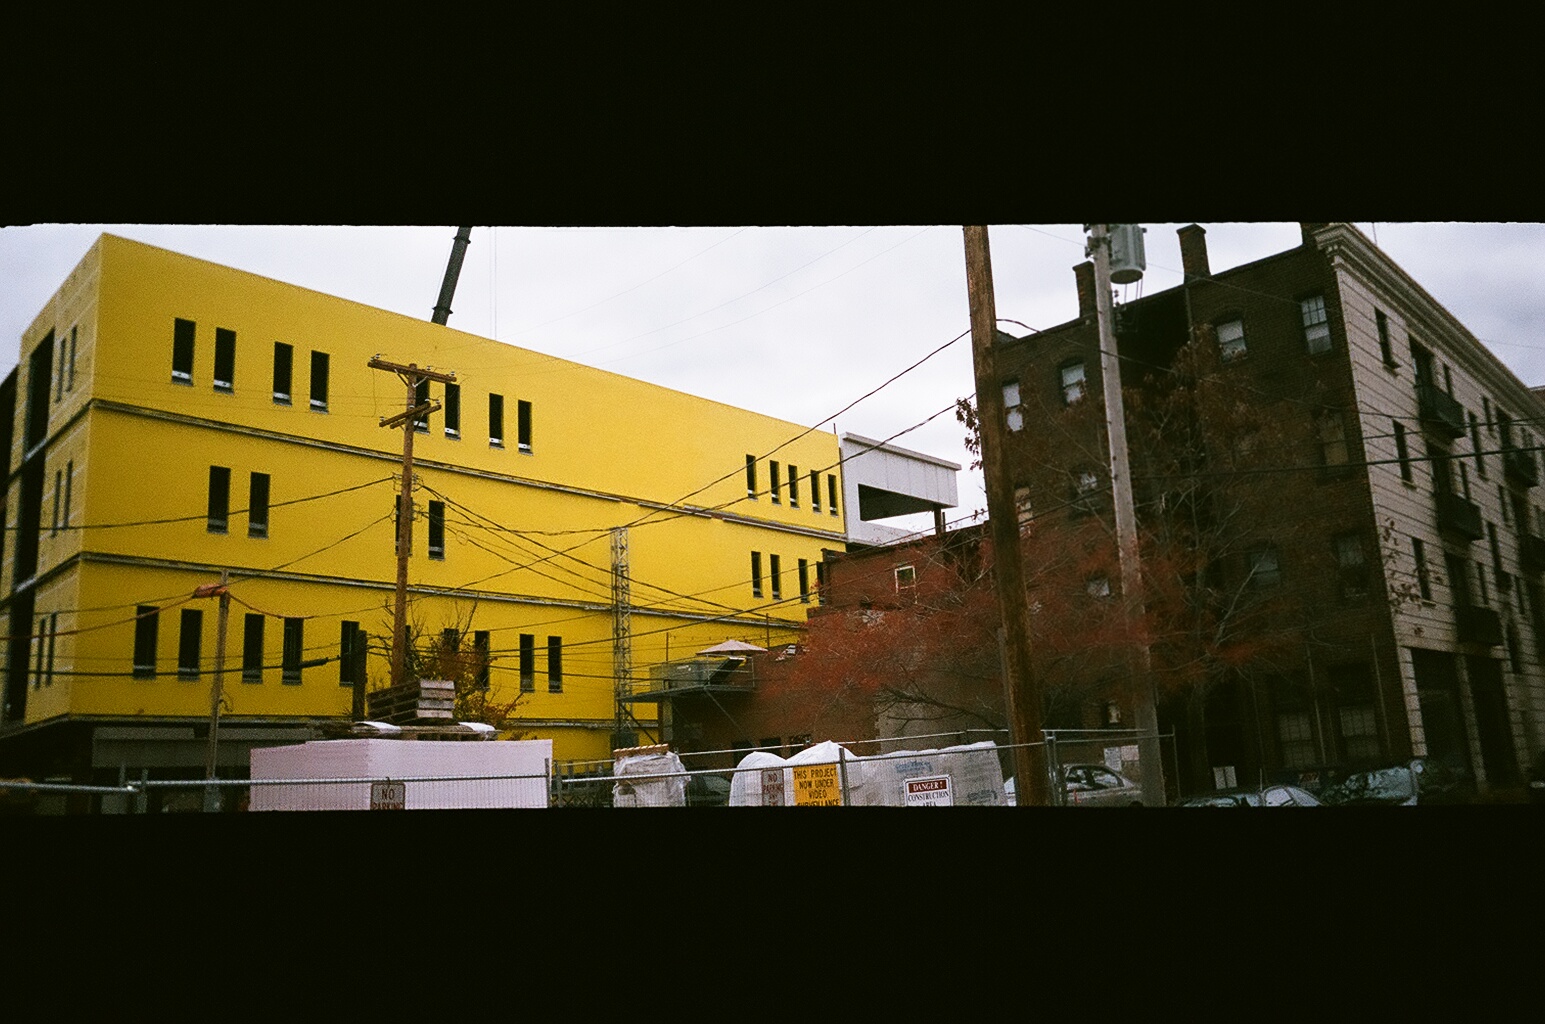 Big yellow building next to Euclid Tavern